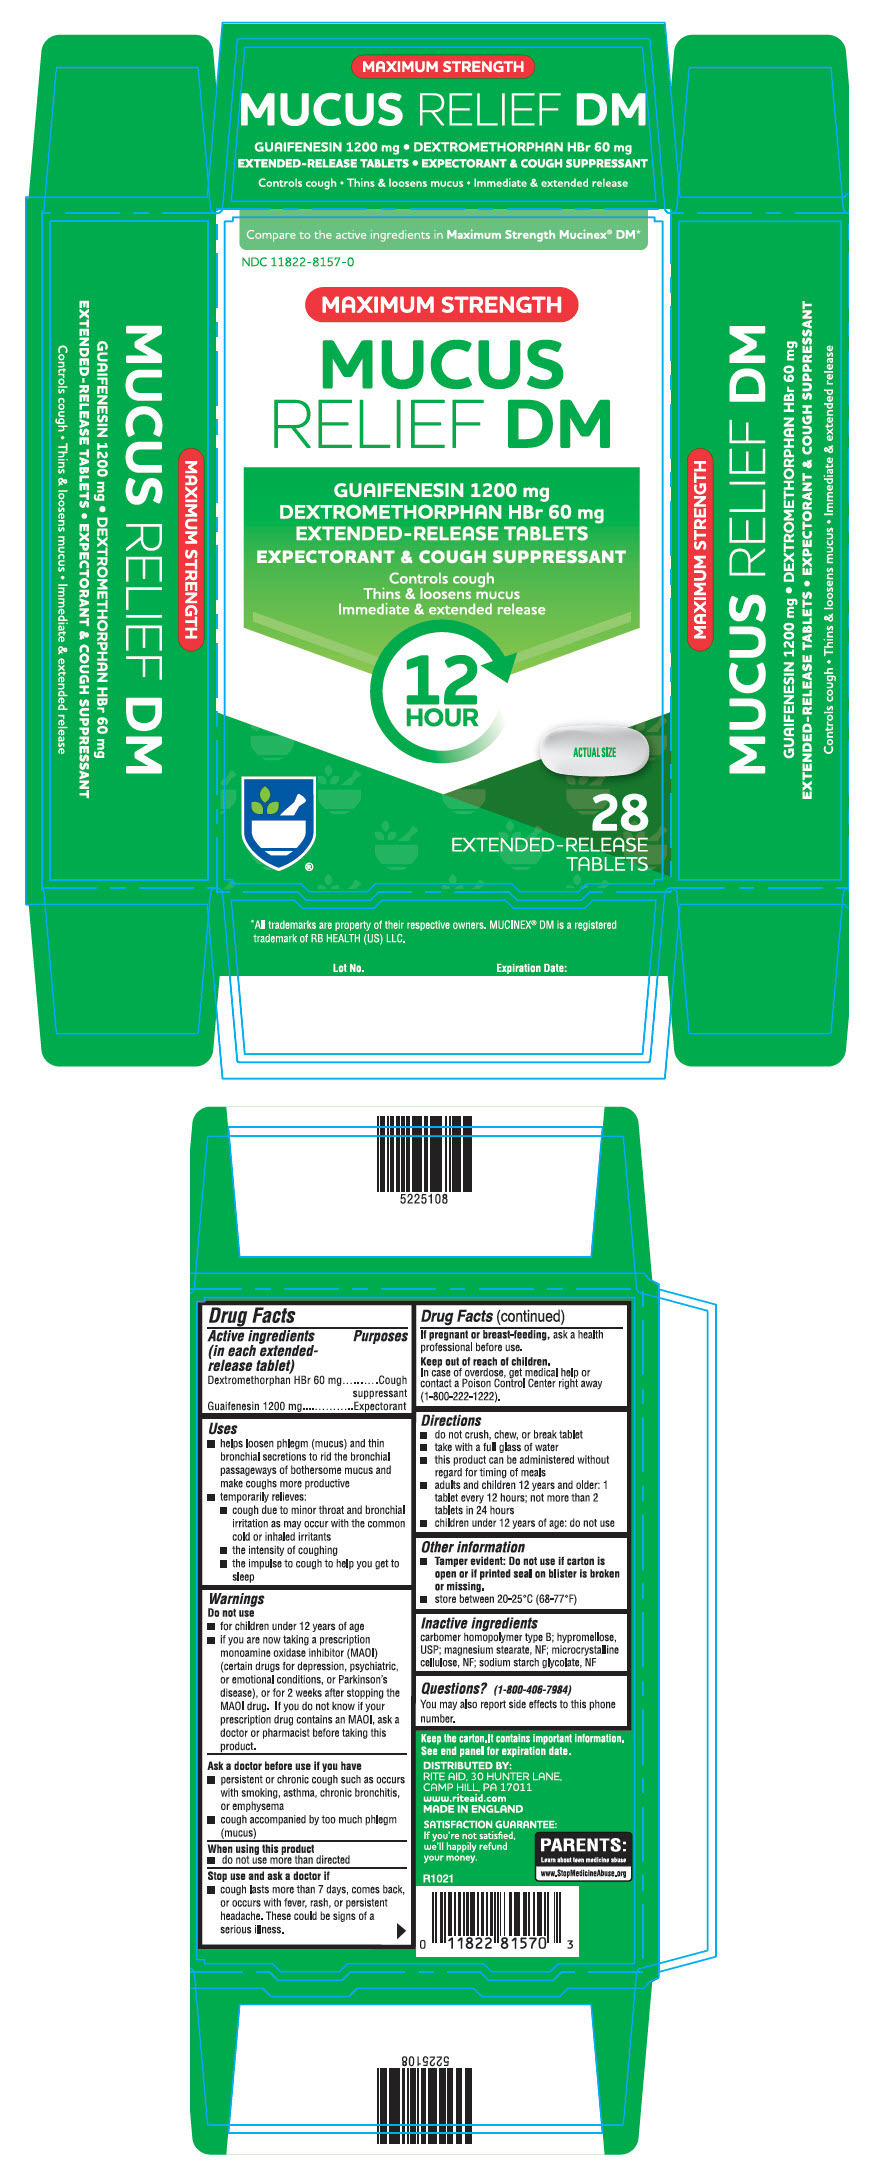 PRINCIPAL DISPLAY PANEL - 28 Tablet Blister Pack Carton